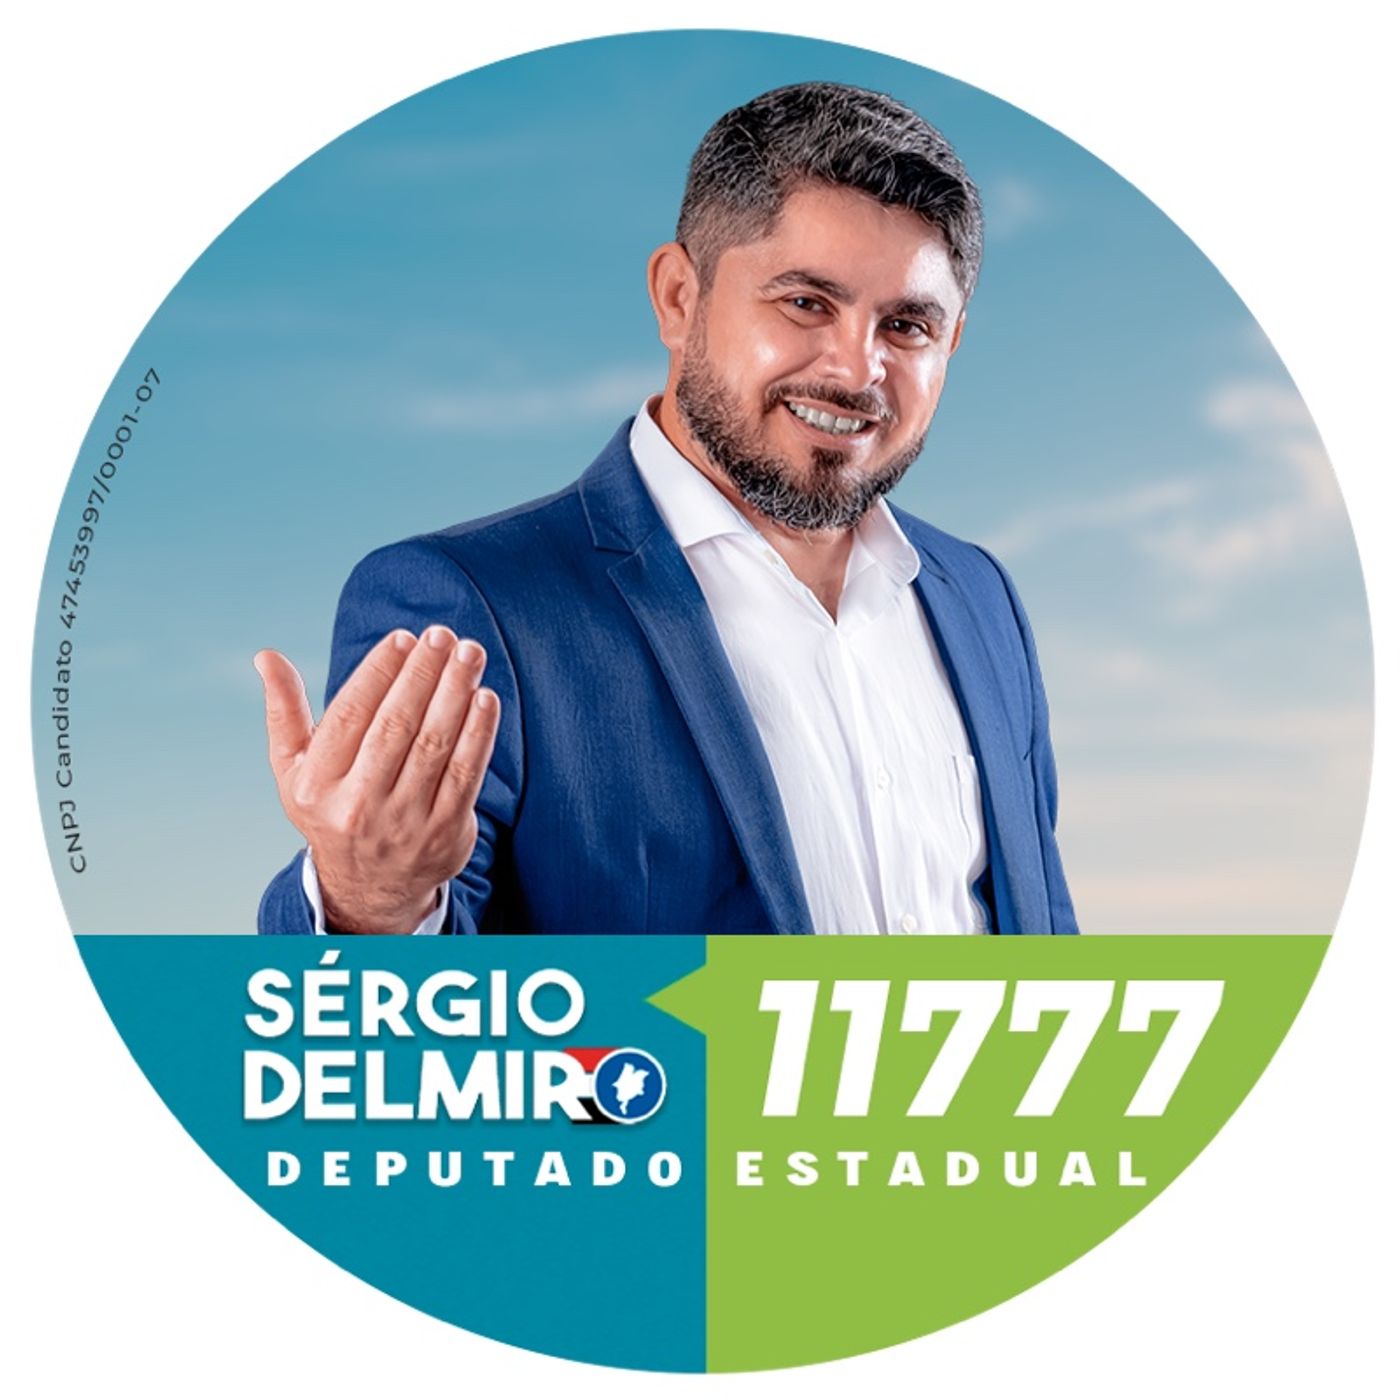 Sérgio Delmiro - 11777 - o homem ta estourado